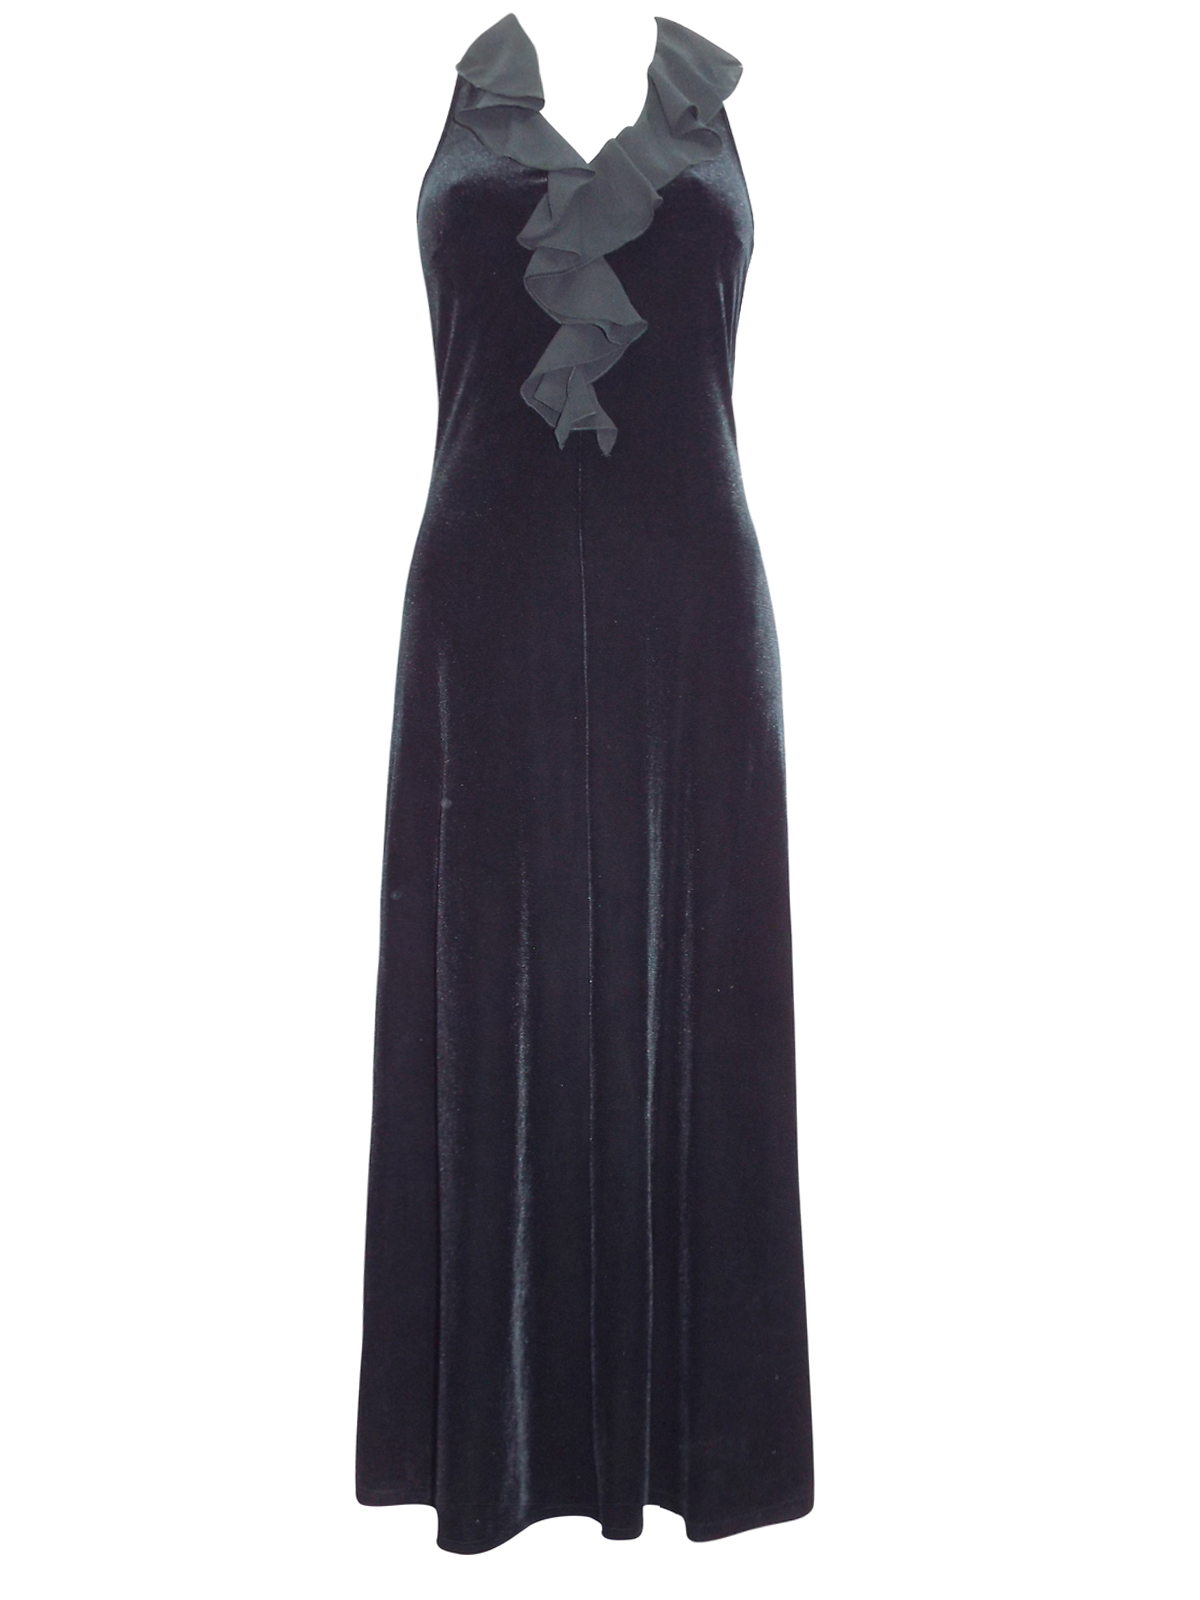 Karida - - Karida BLACK Frill Trim Velvet Maxi Dress - Size 10 to 18